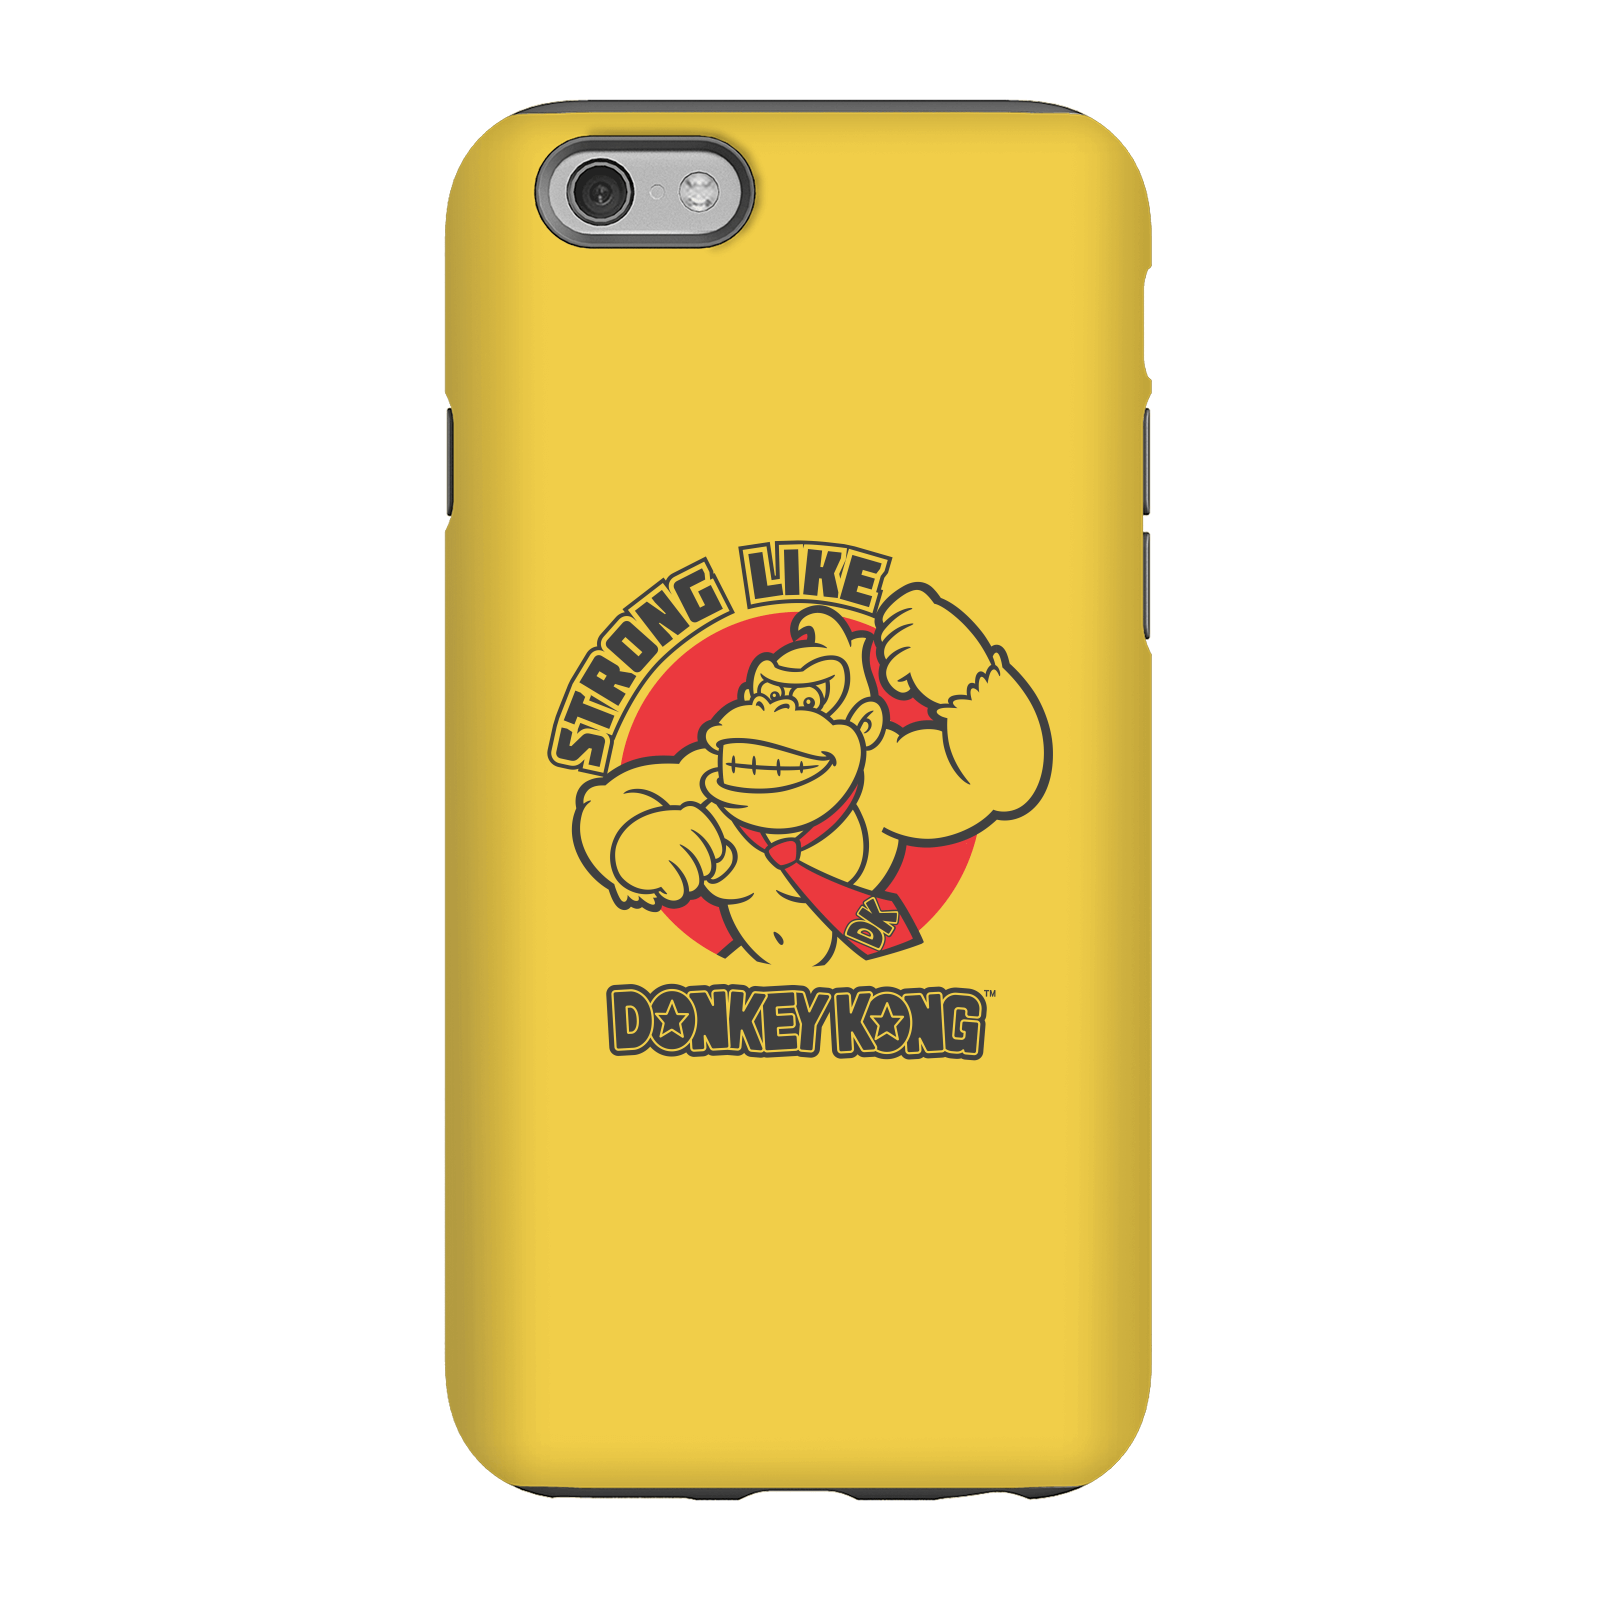 Nintendo Donkey Kong Strong Like Donkey Kong Phone Case - iPhone 6S - Tough Case - Gloss